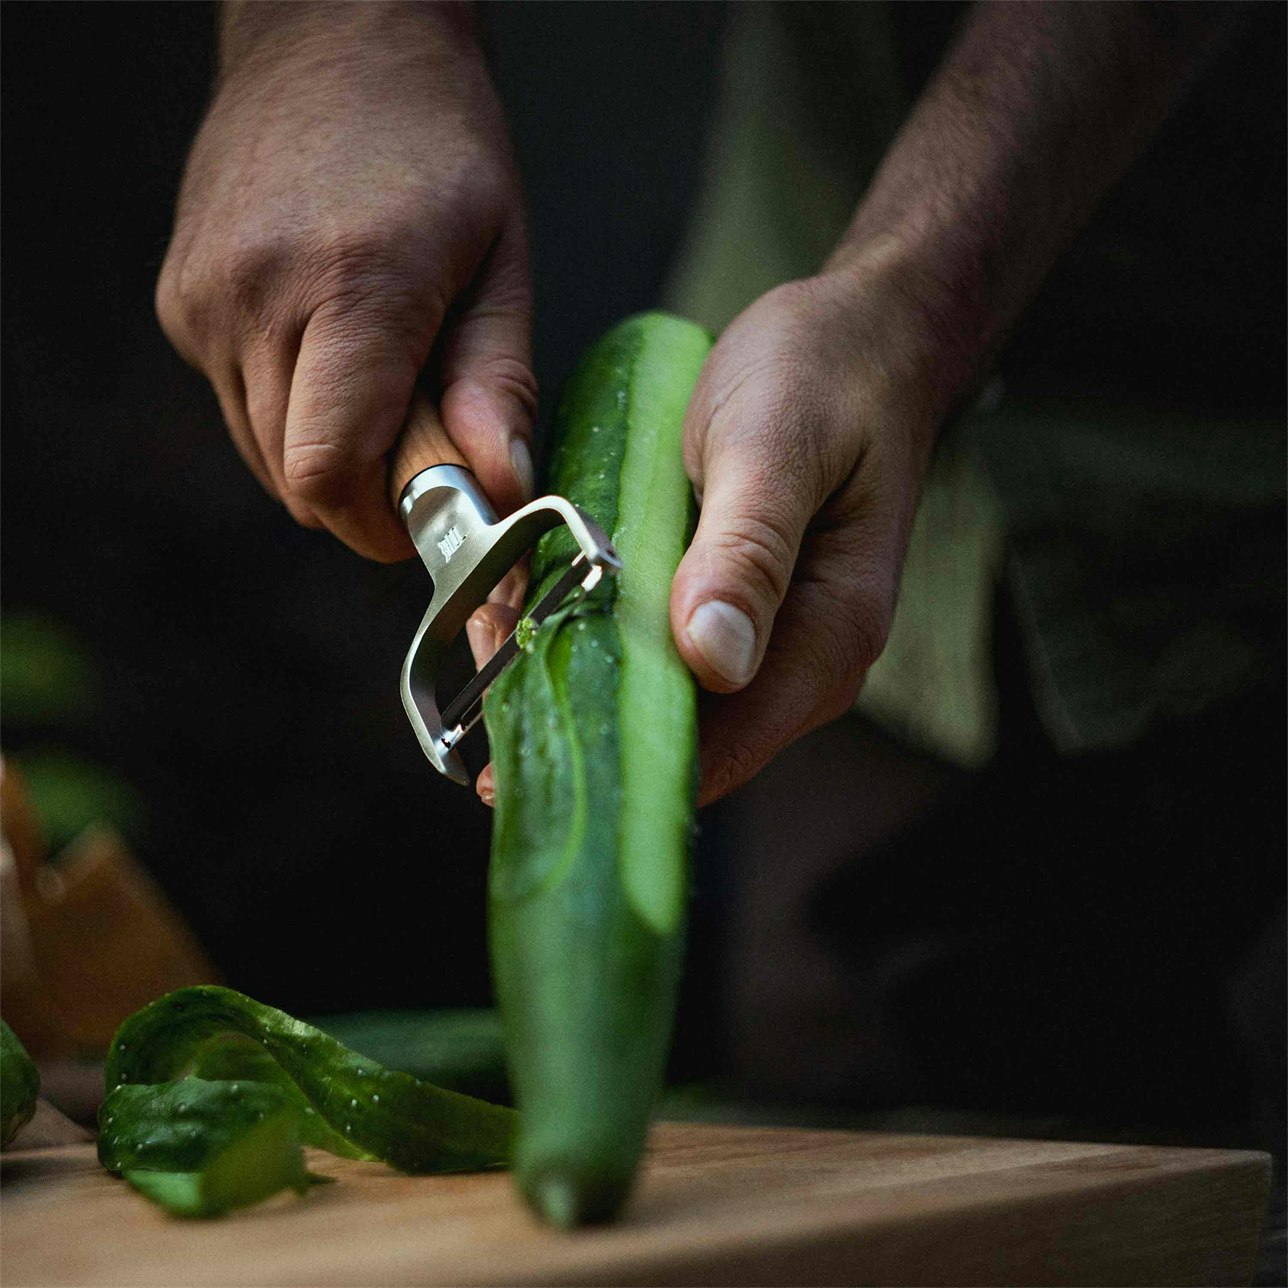 https://royaldesign.com/image/2/fiskars-norden-potato-peeler-with-movable-blade-3